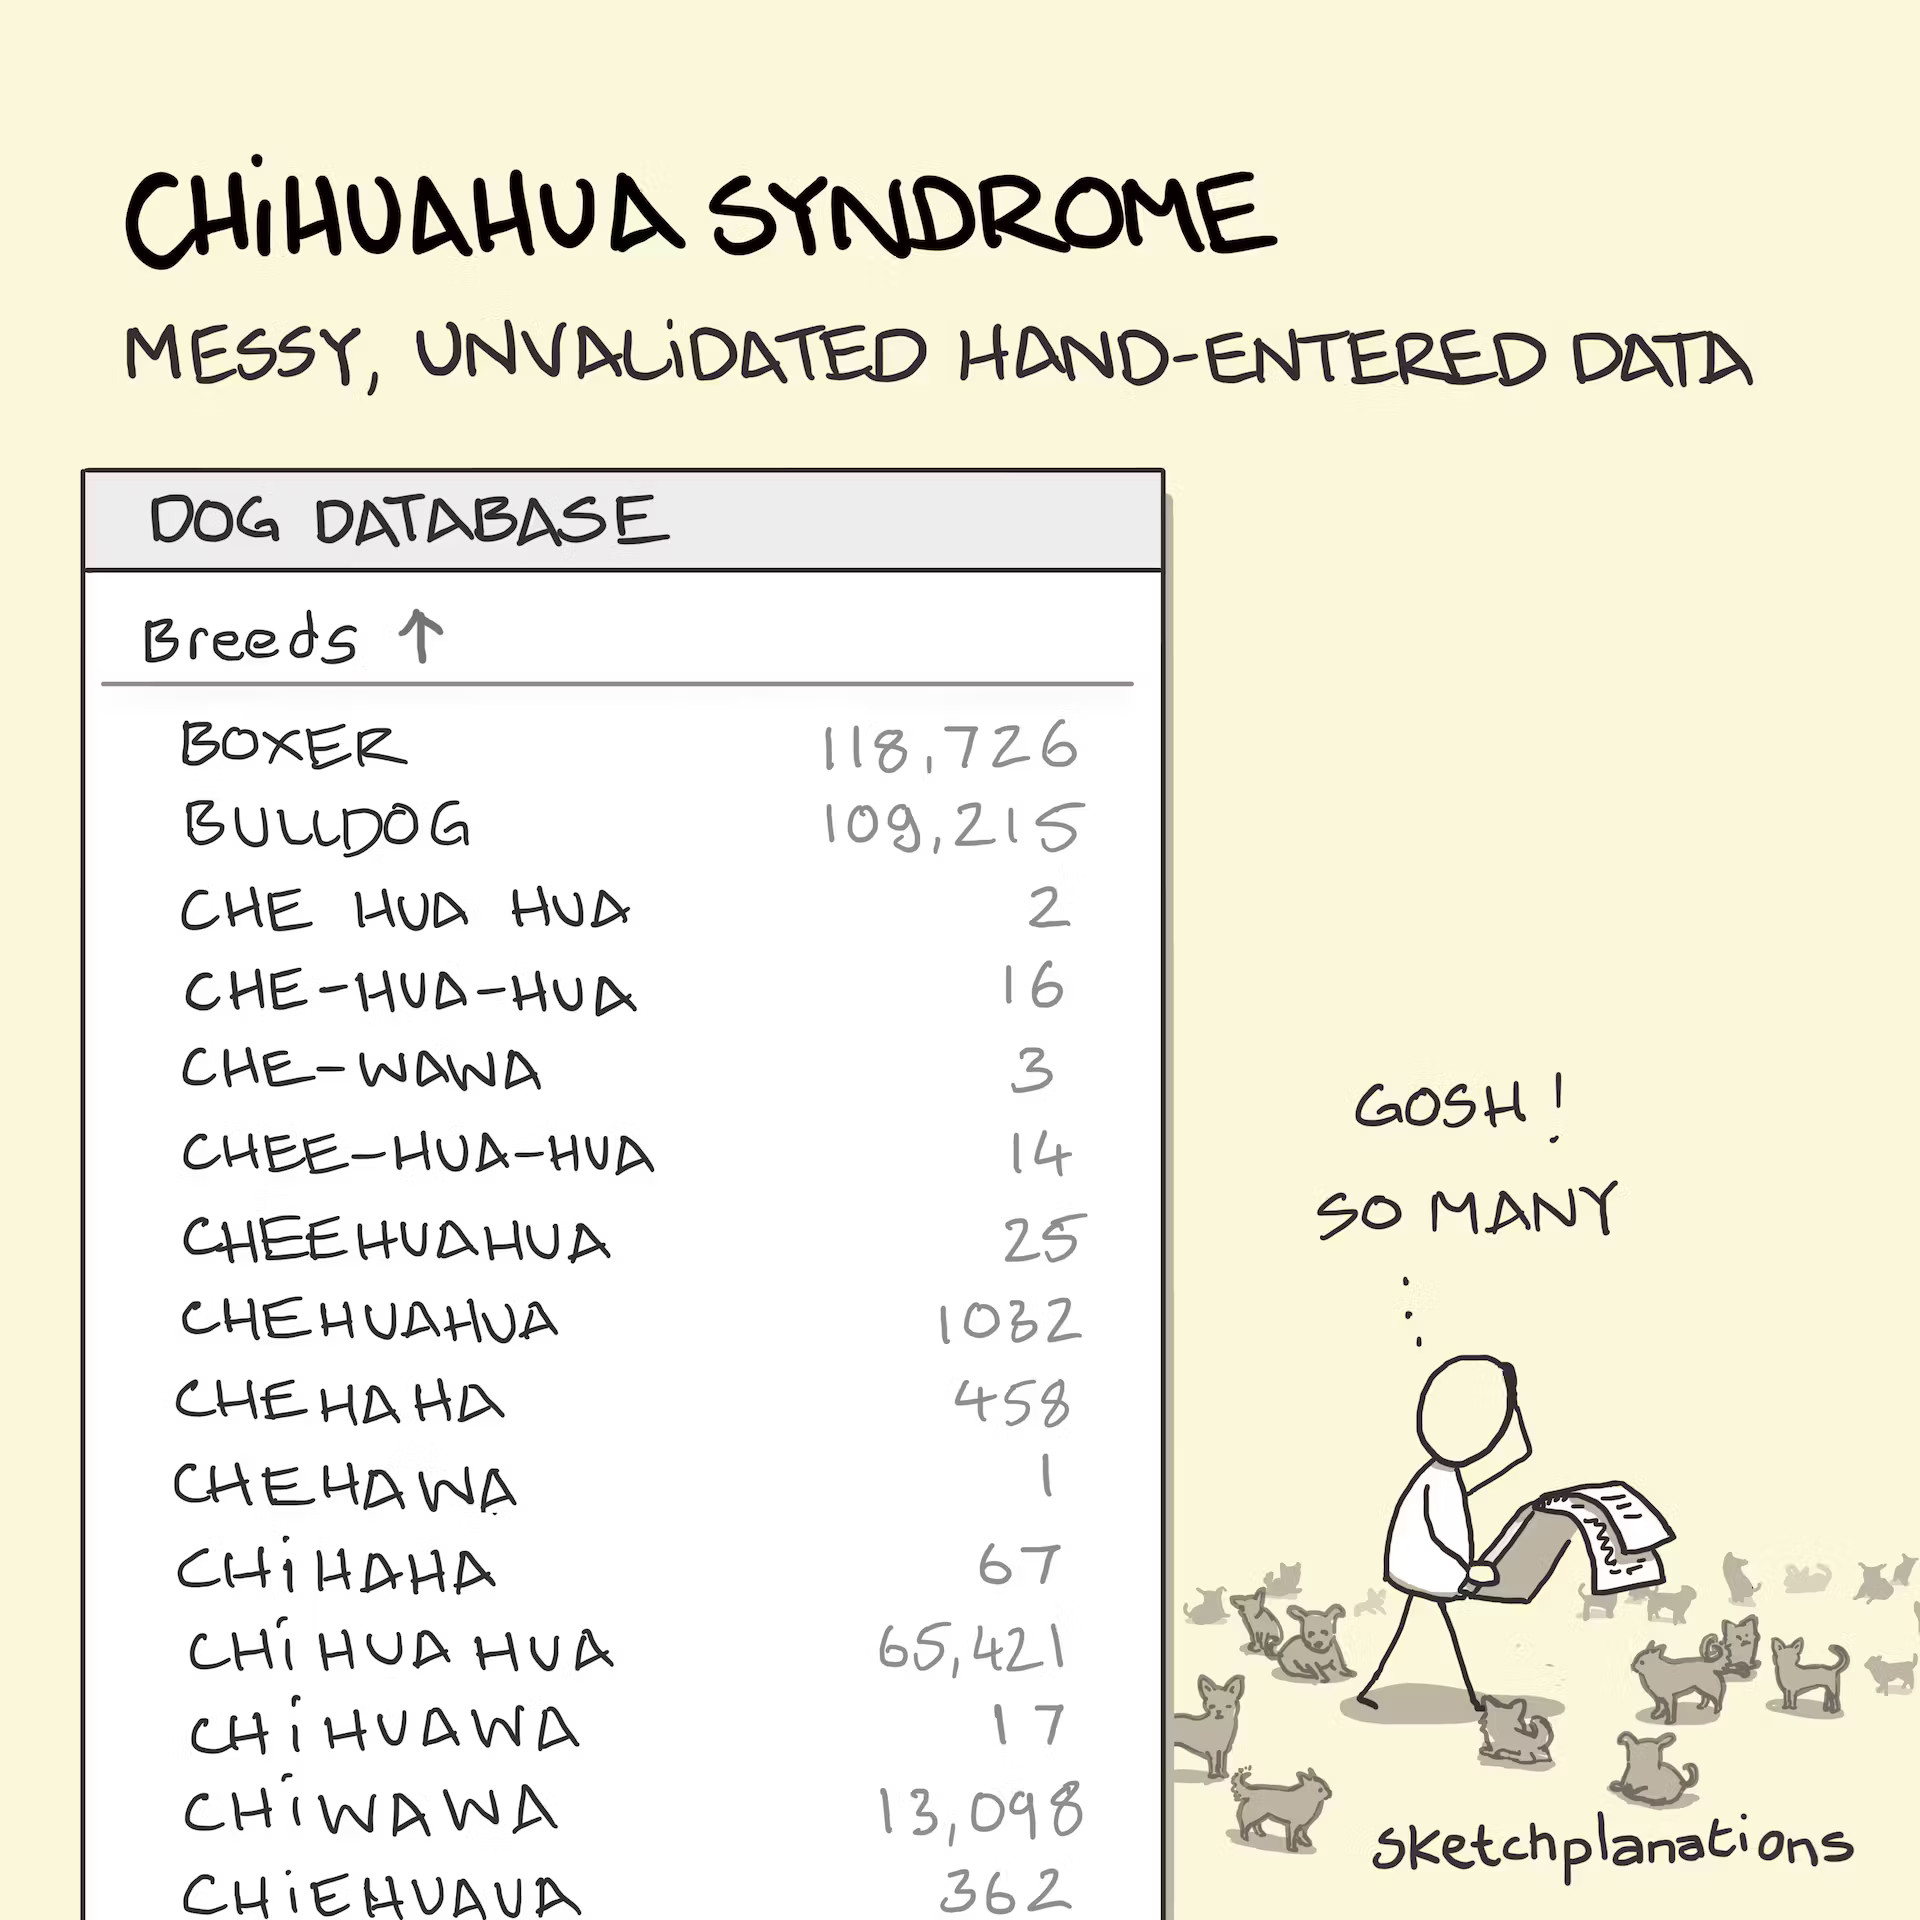 Chihuahua syndrome